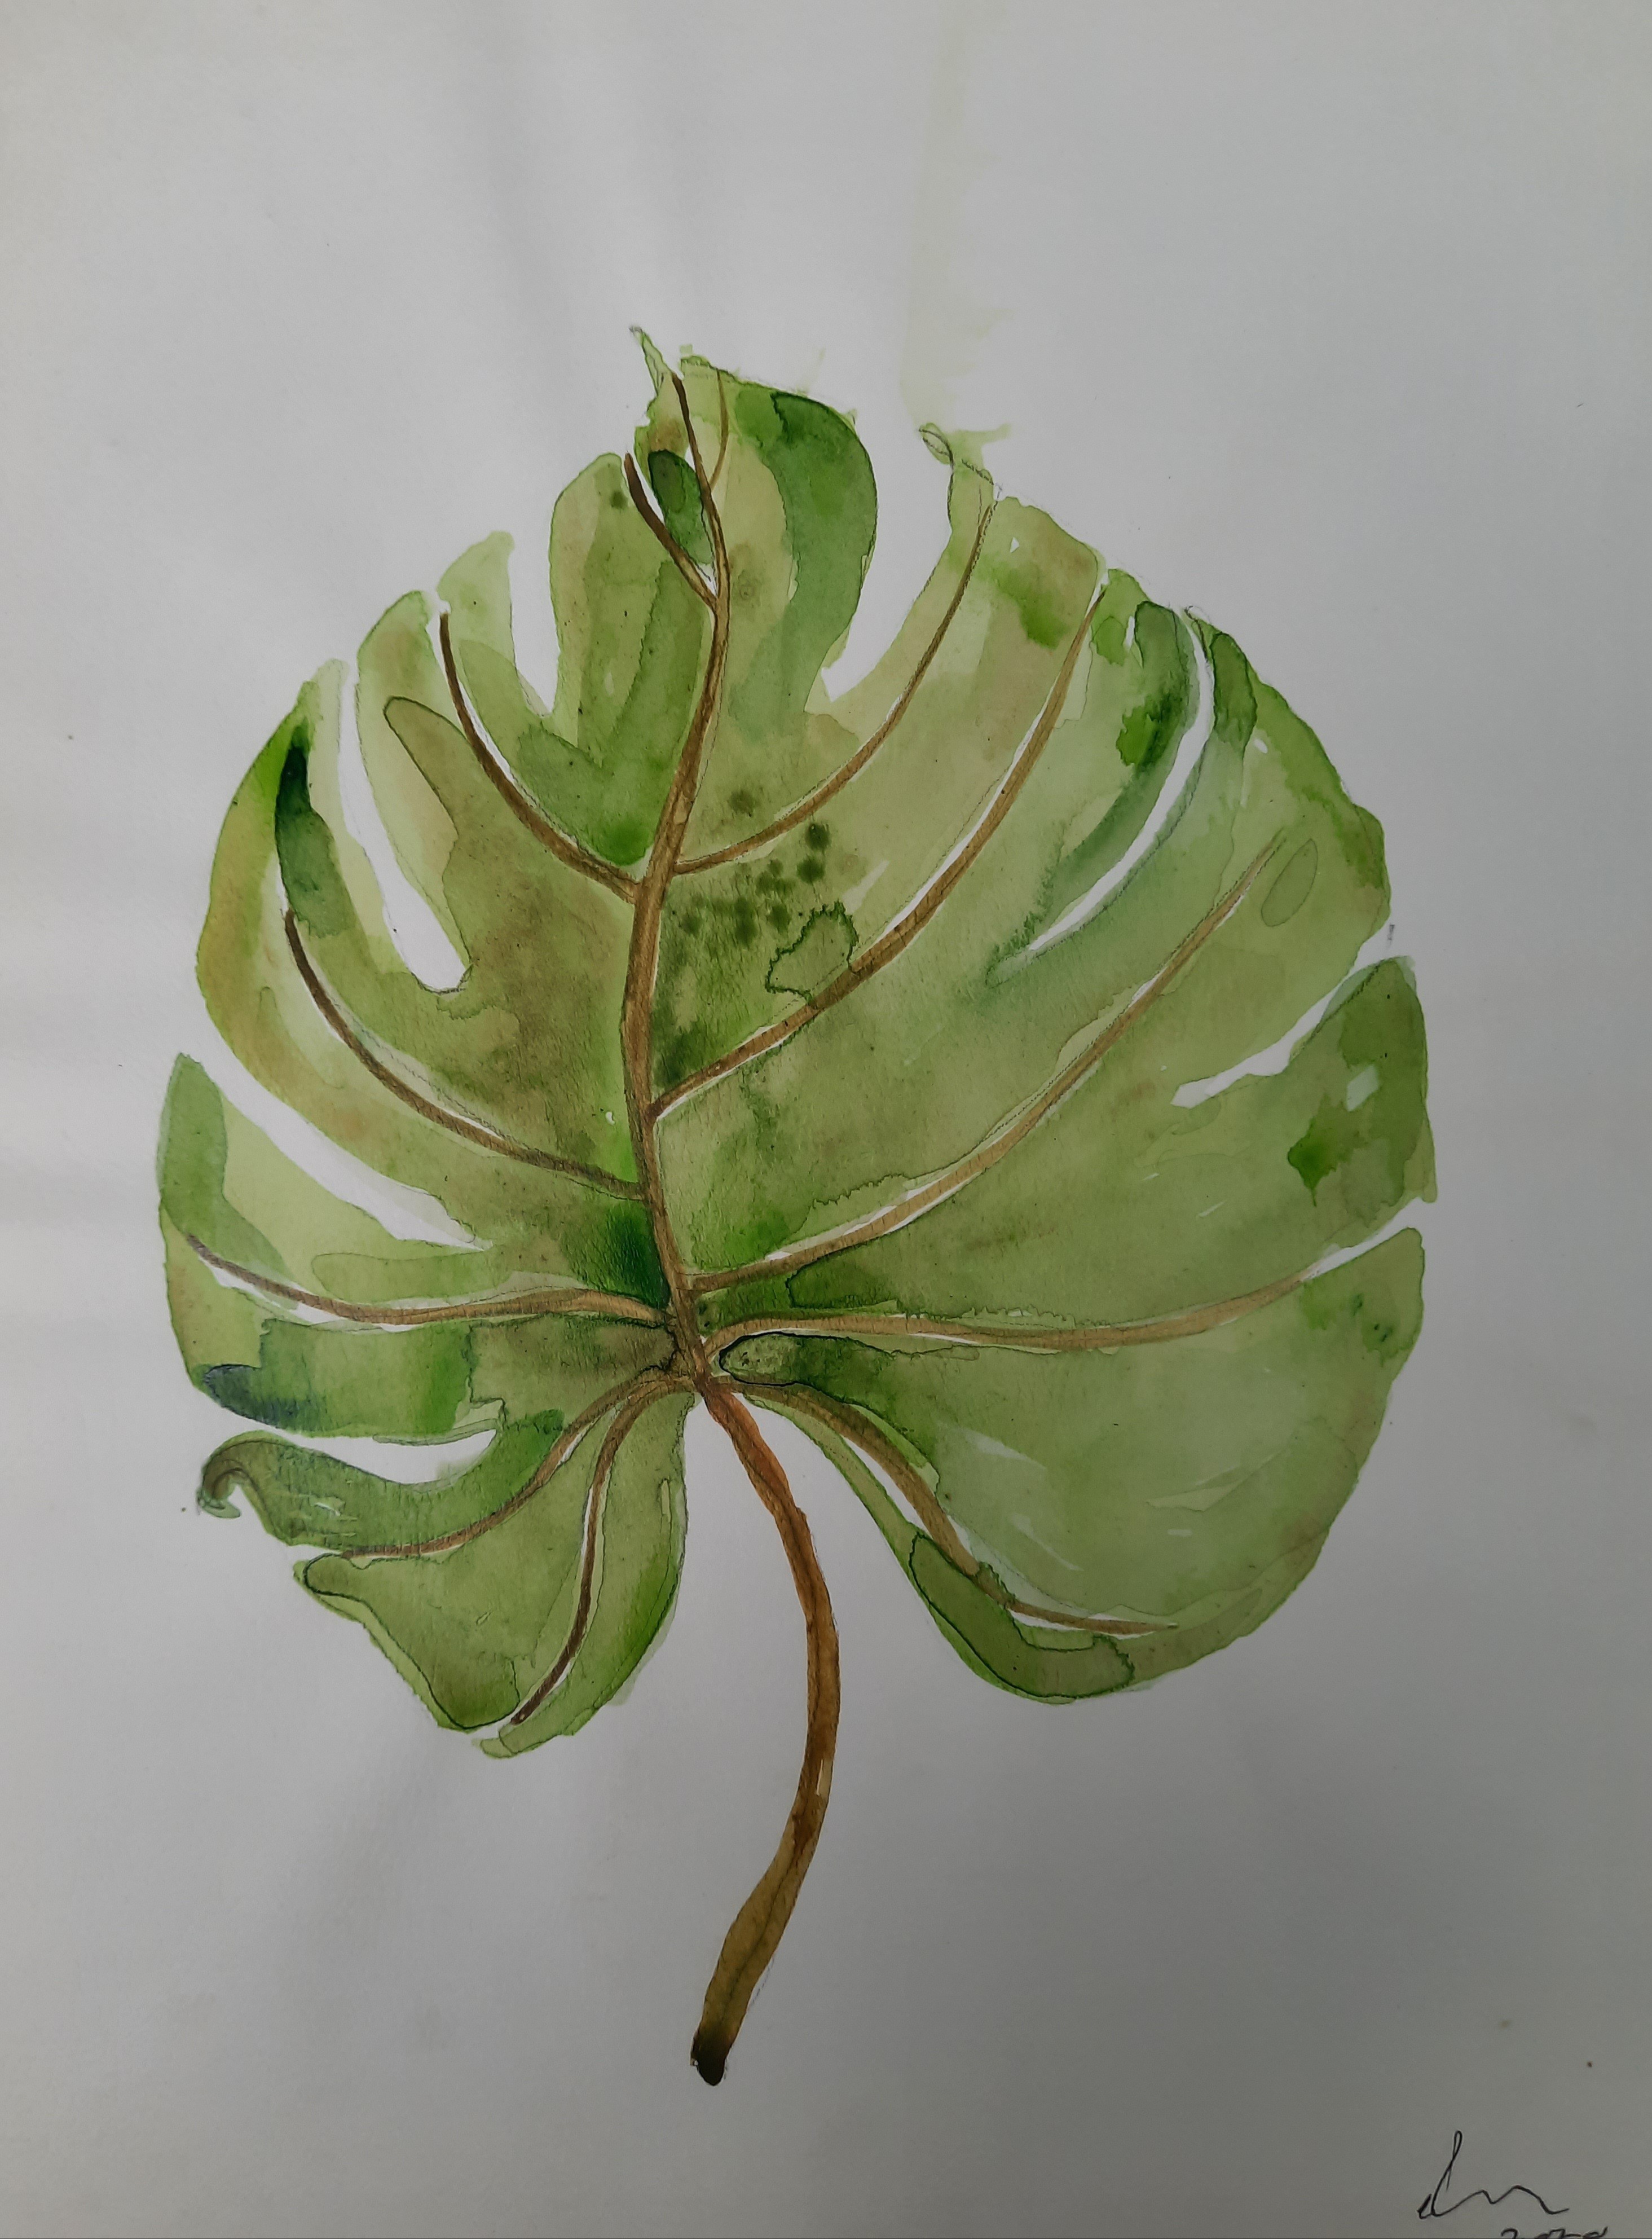 The Leaf by Sanjeewa Ilangarathne